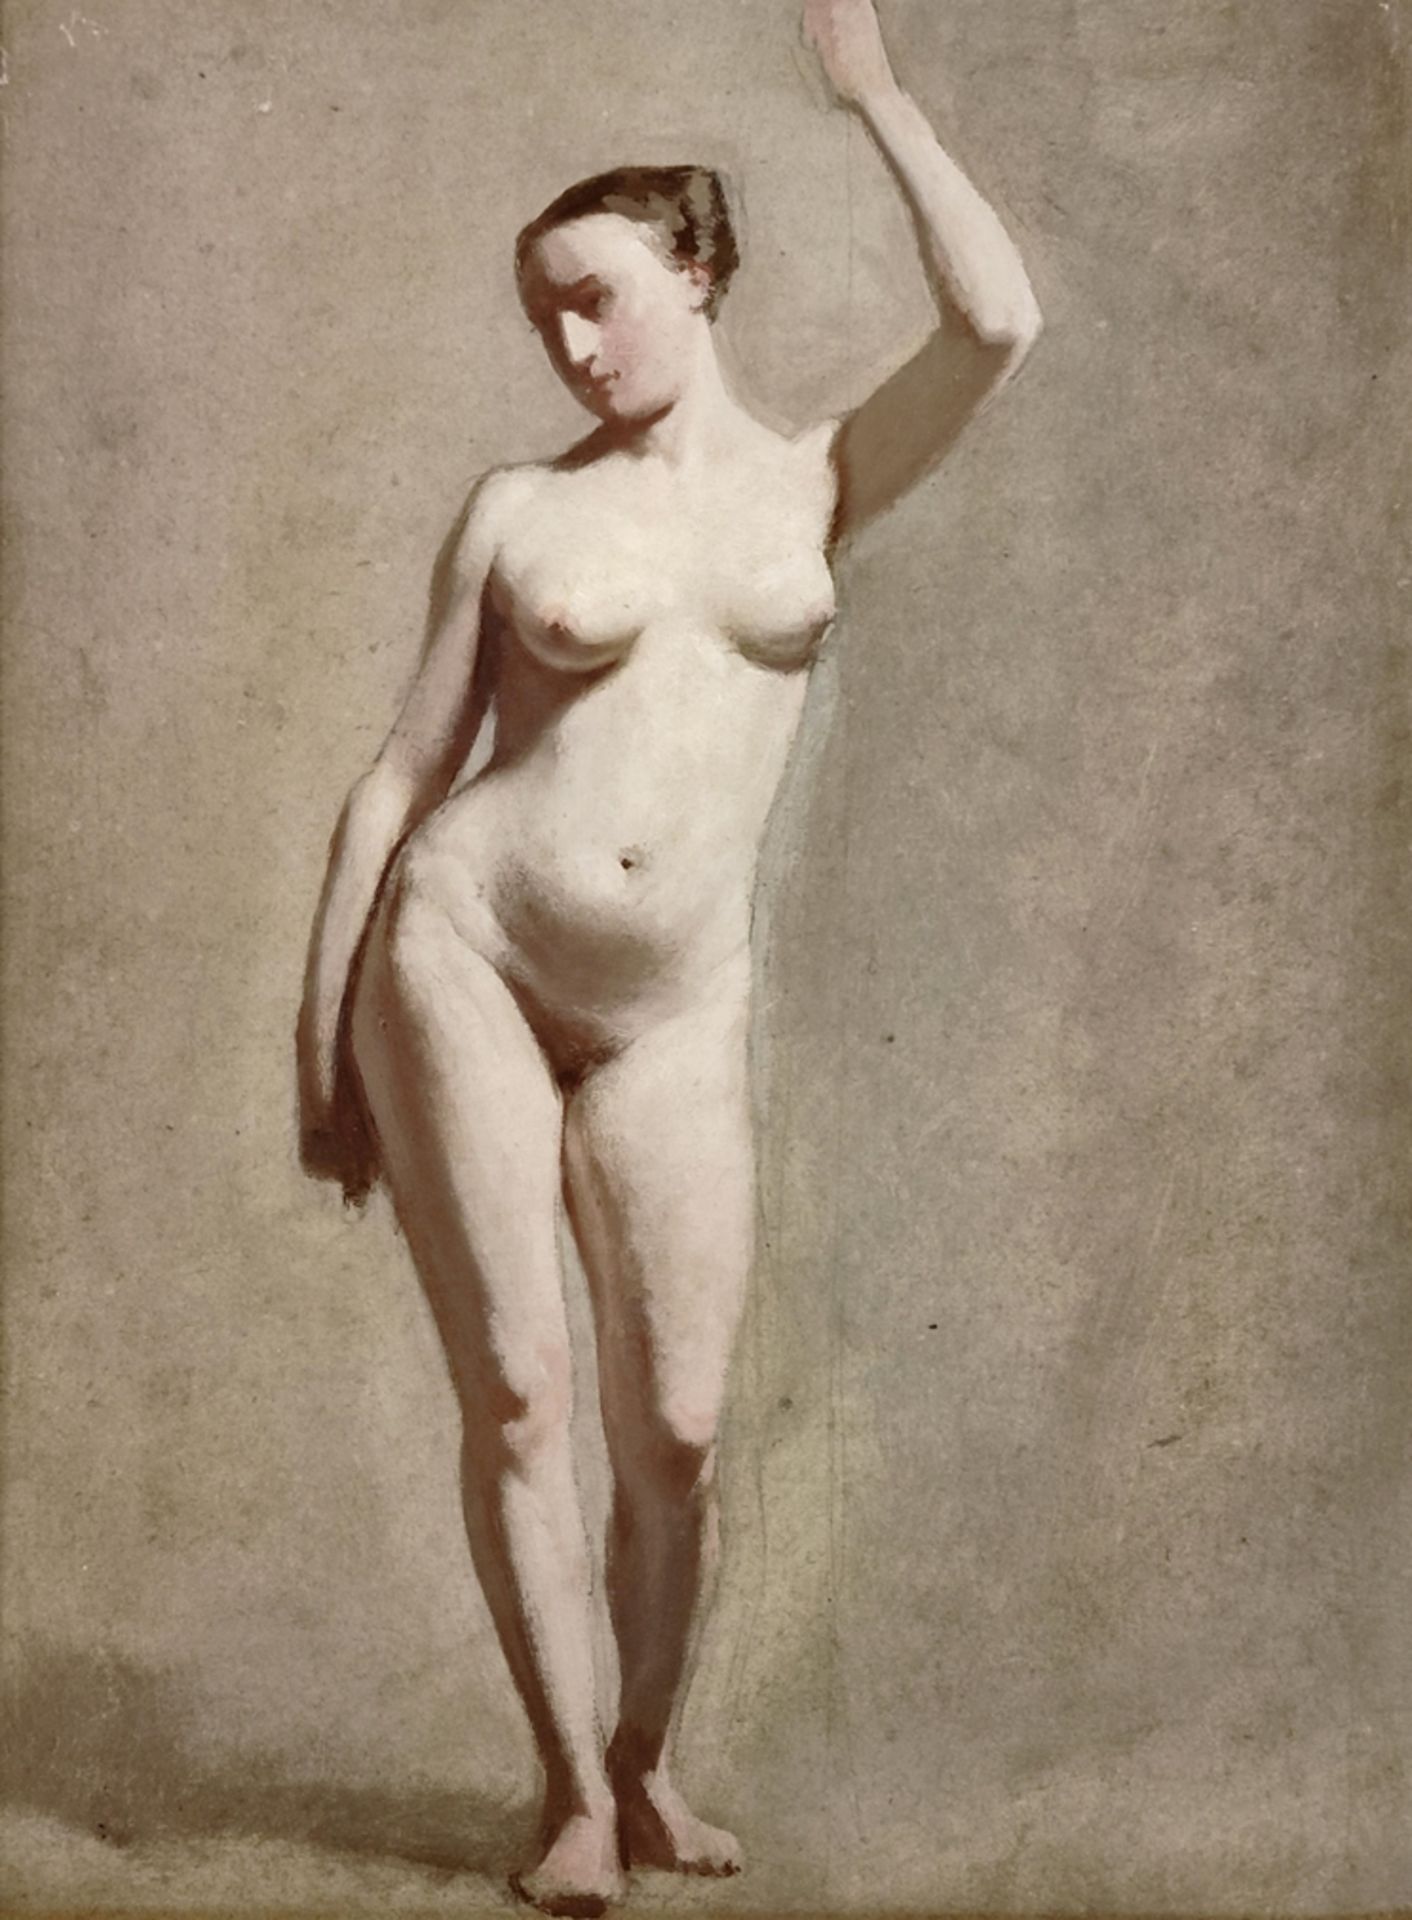 Herbert, Jules (1812 - 1897 Geneva) "Standing female nude", oil on cardboard, labelled in French on